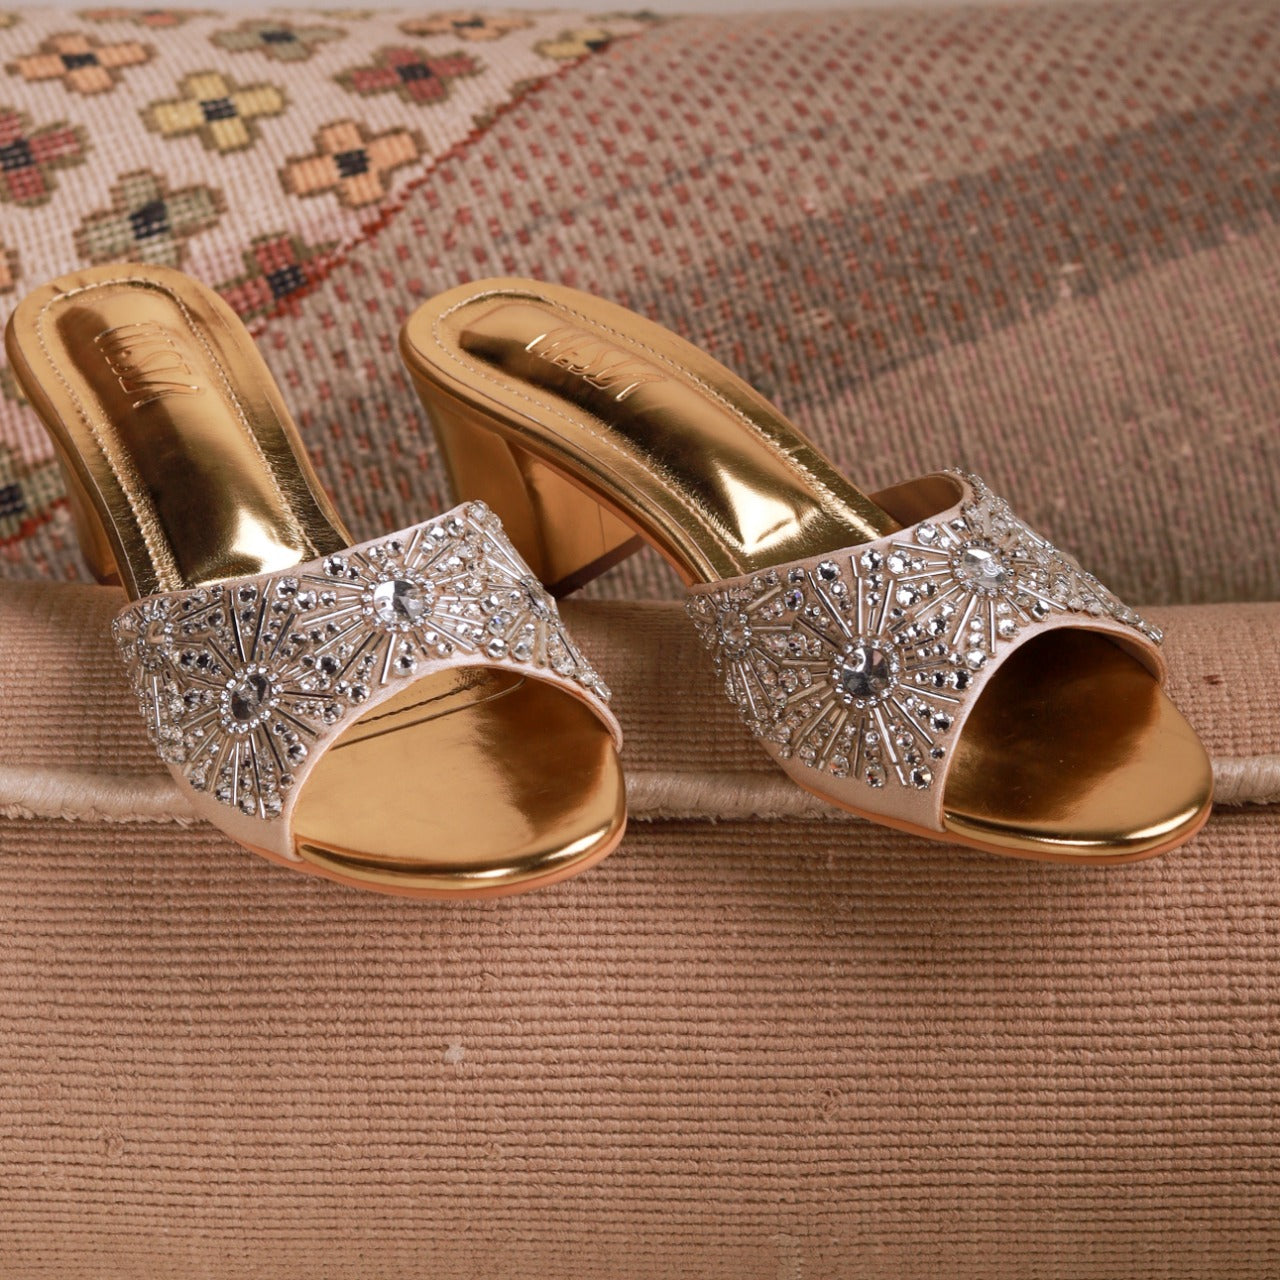 Peach color wedges for a beutiful bride, Platform heels for bride, Wedding  wedge | eBay